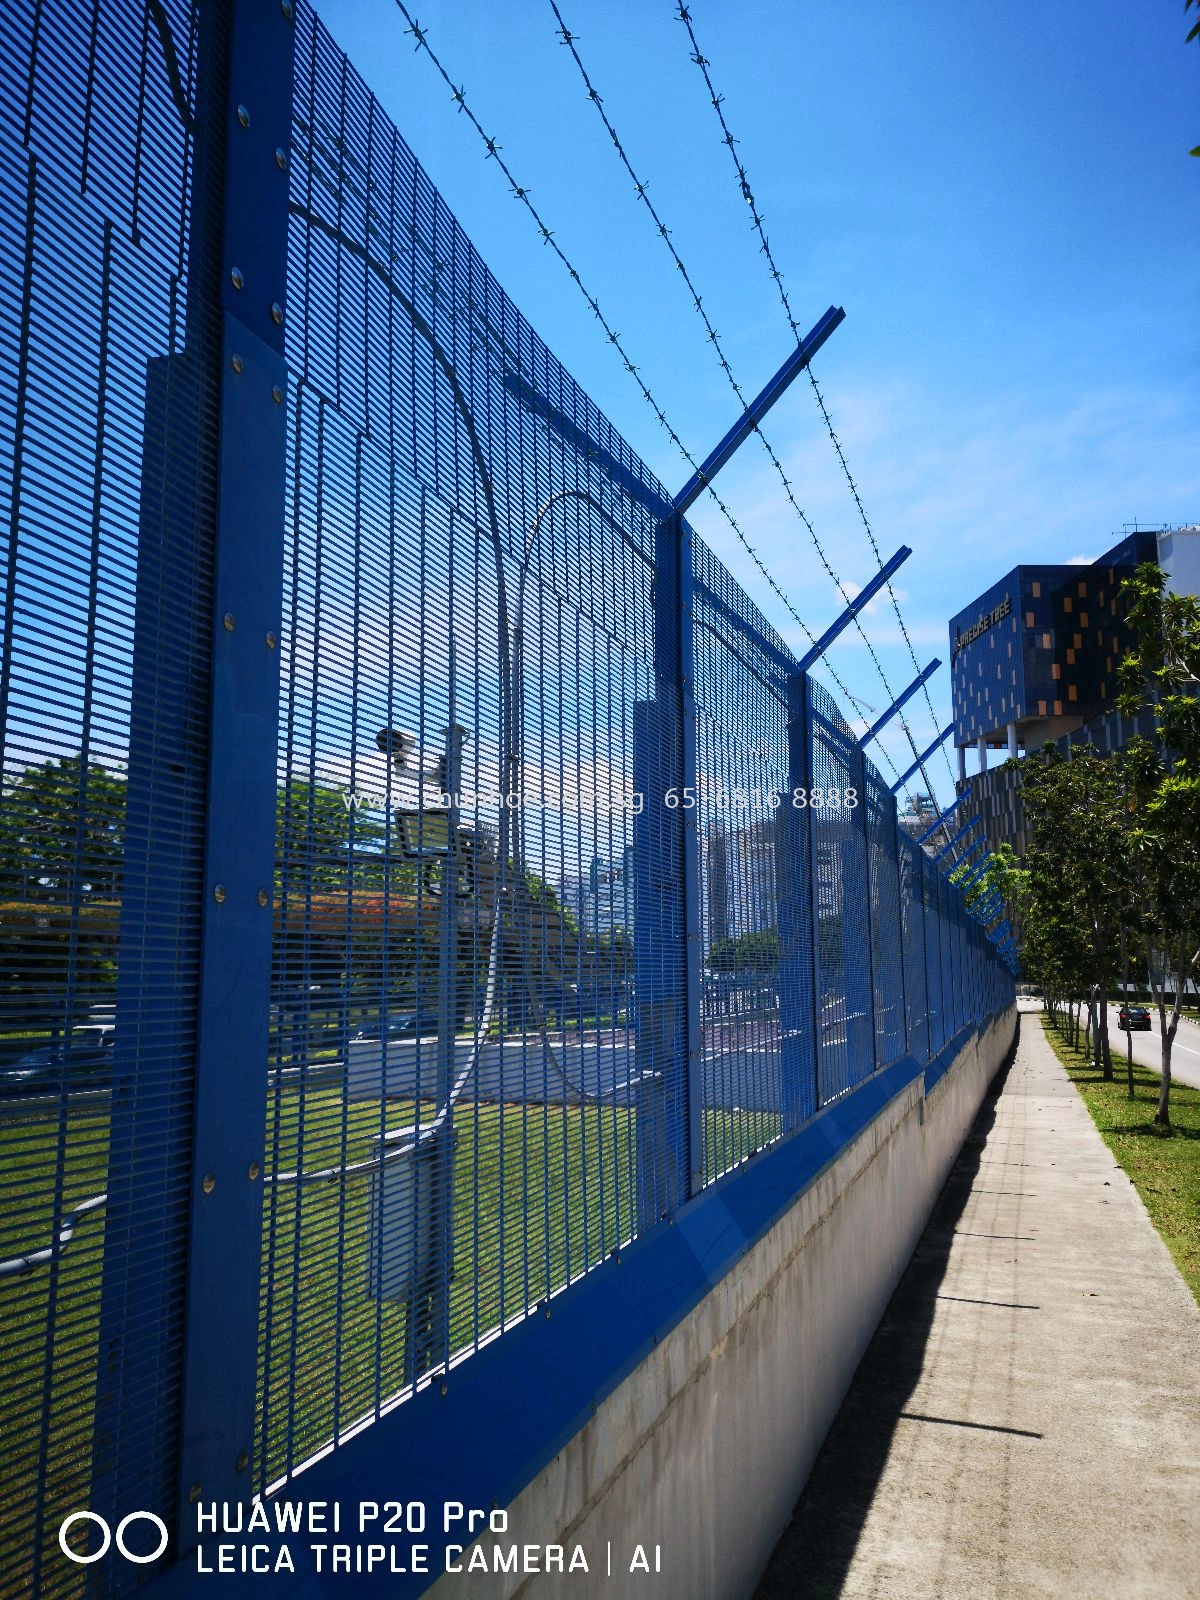 Anti Climb Security Fence Singapore 